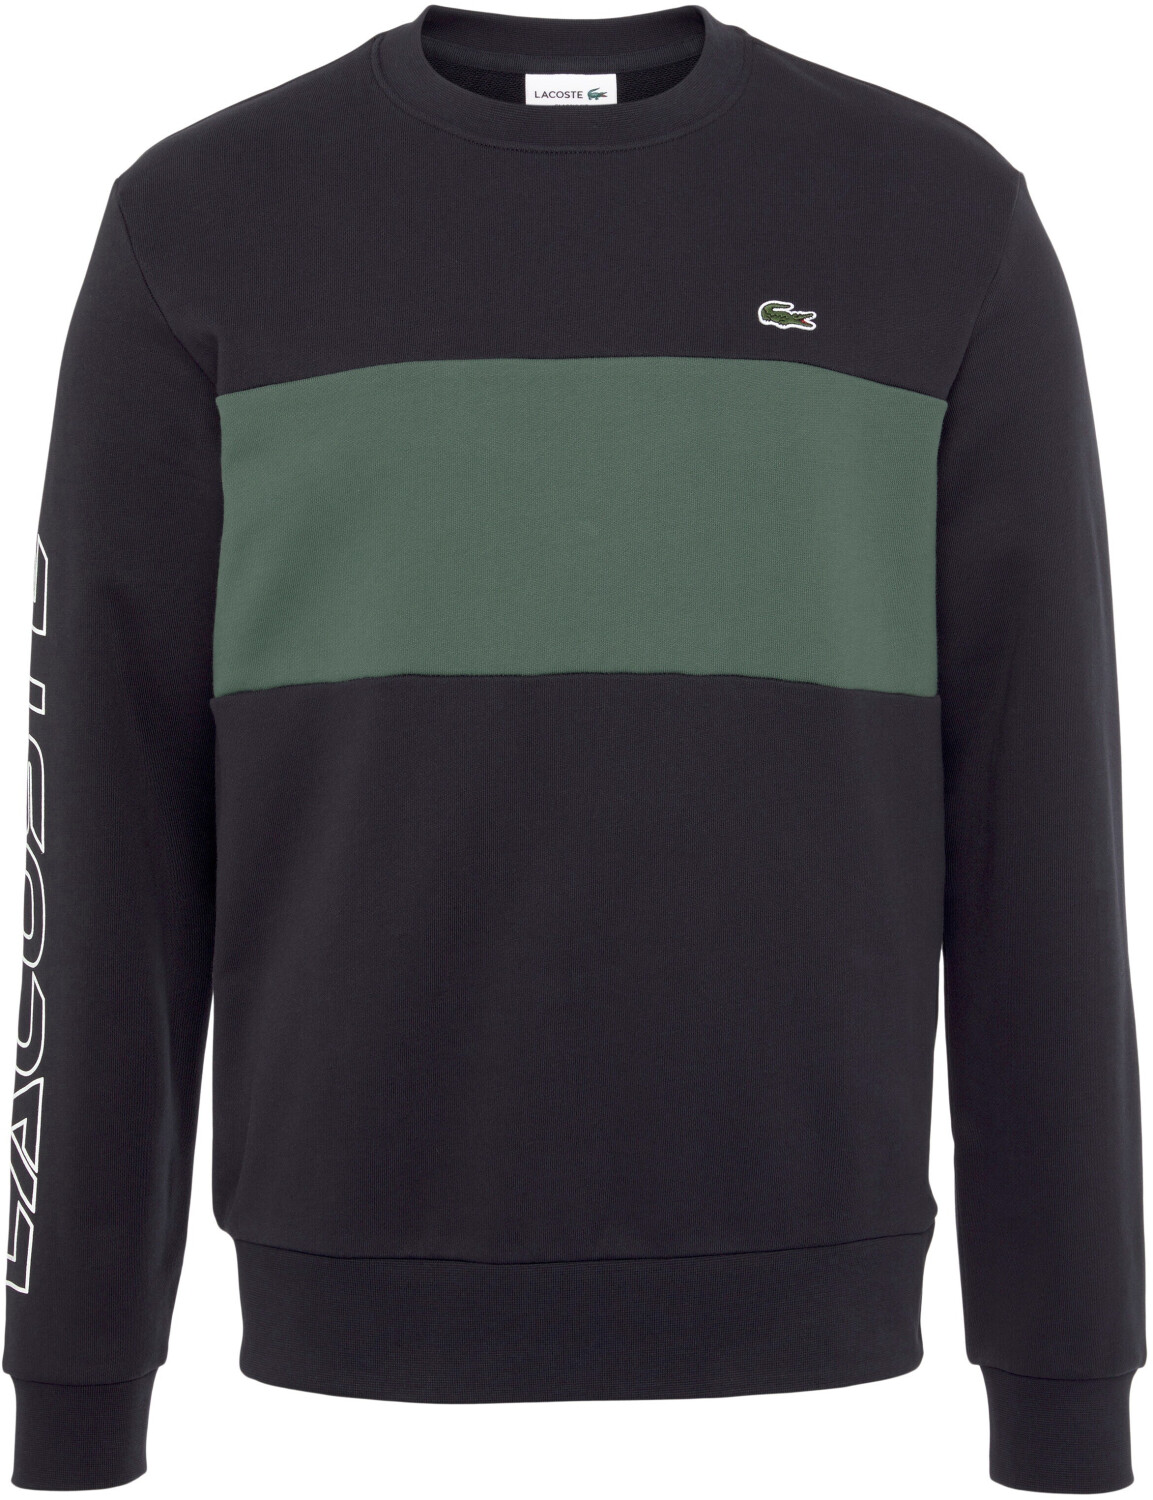 Lacoste Sweatshirt (SH1433) ab € 83,99 | Preisvergleich bei